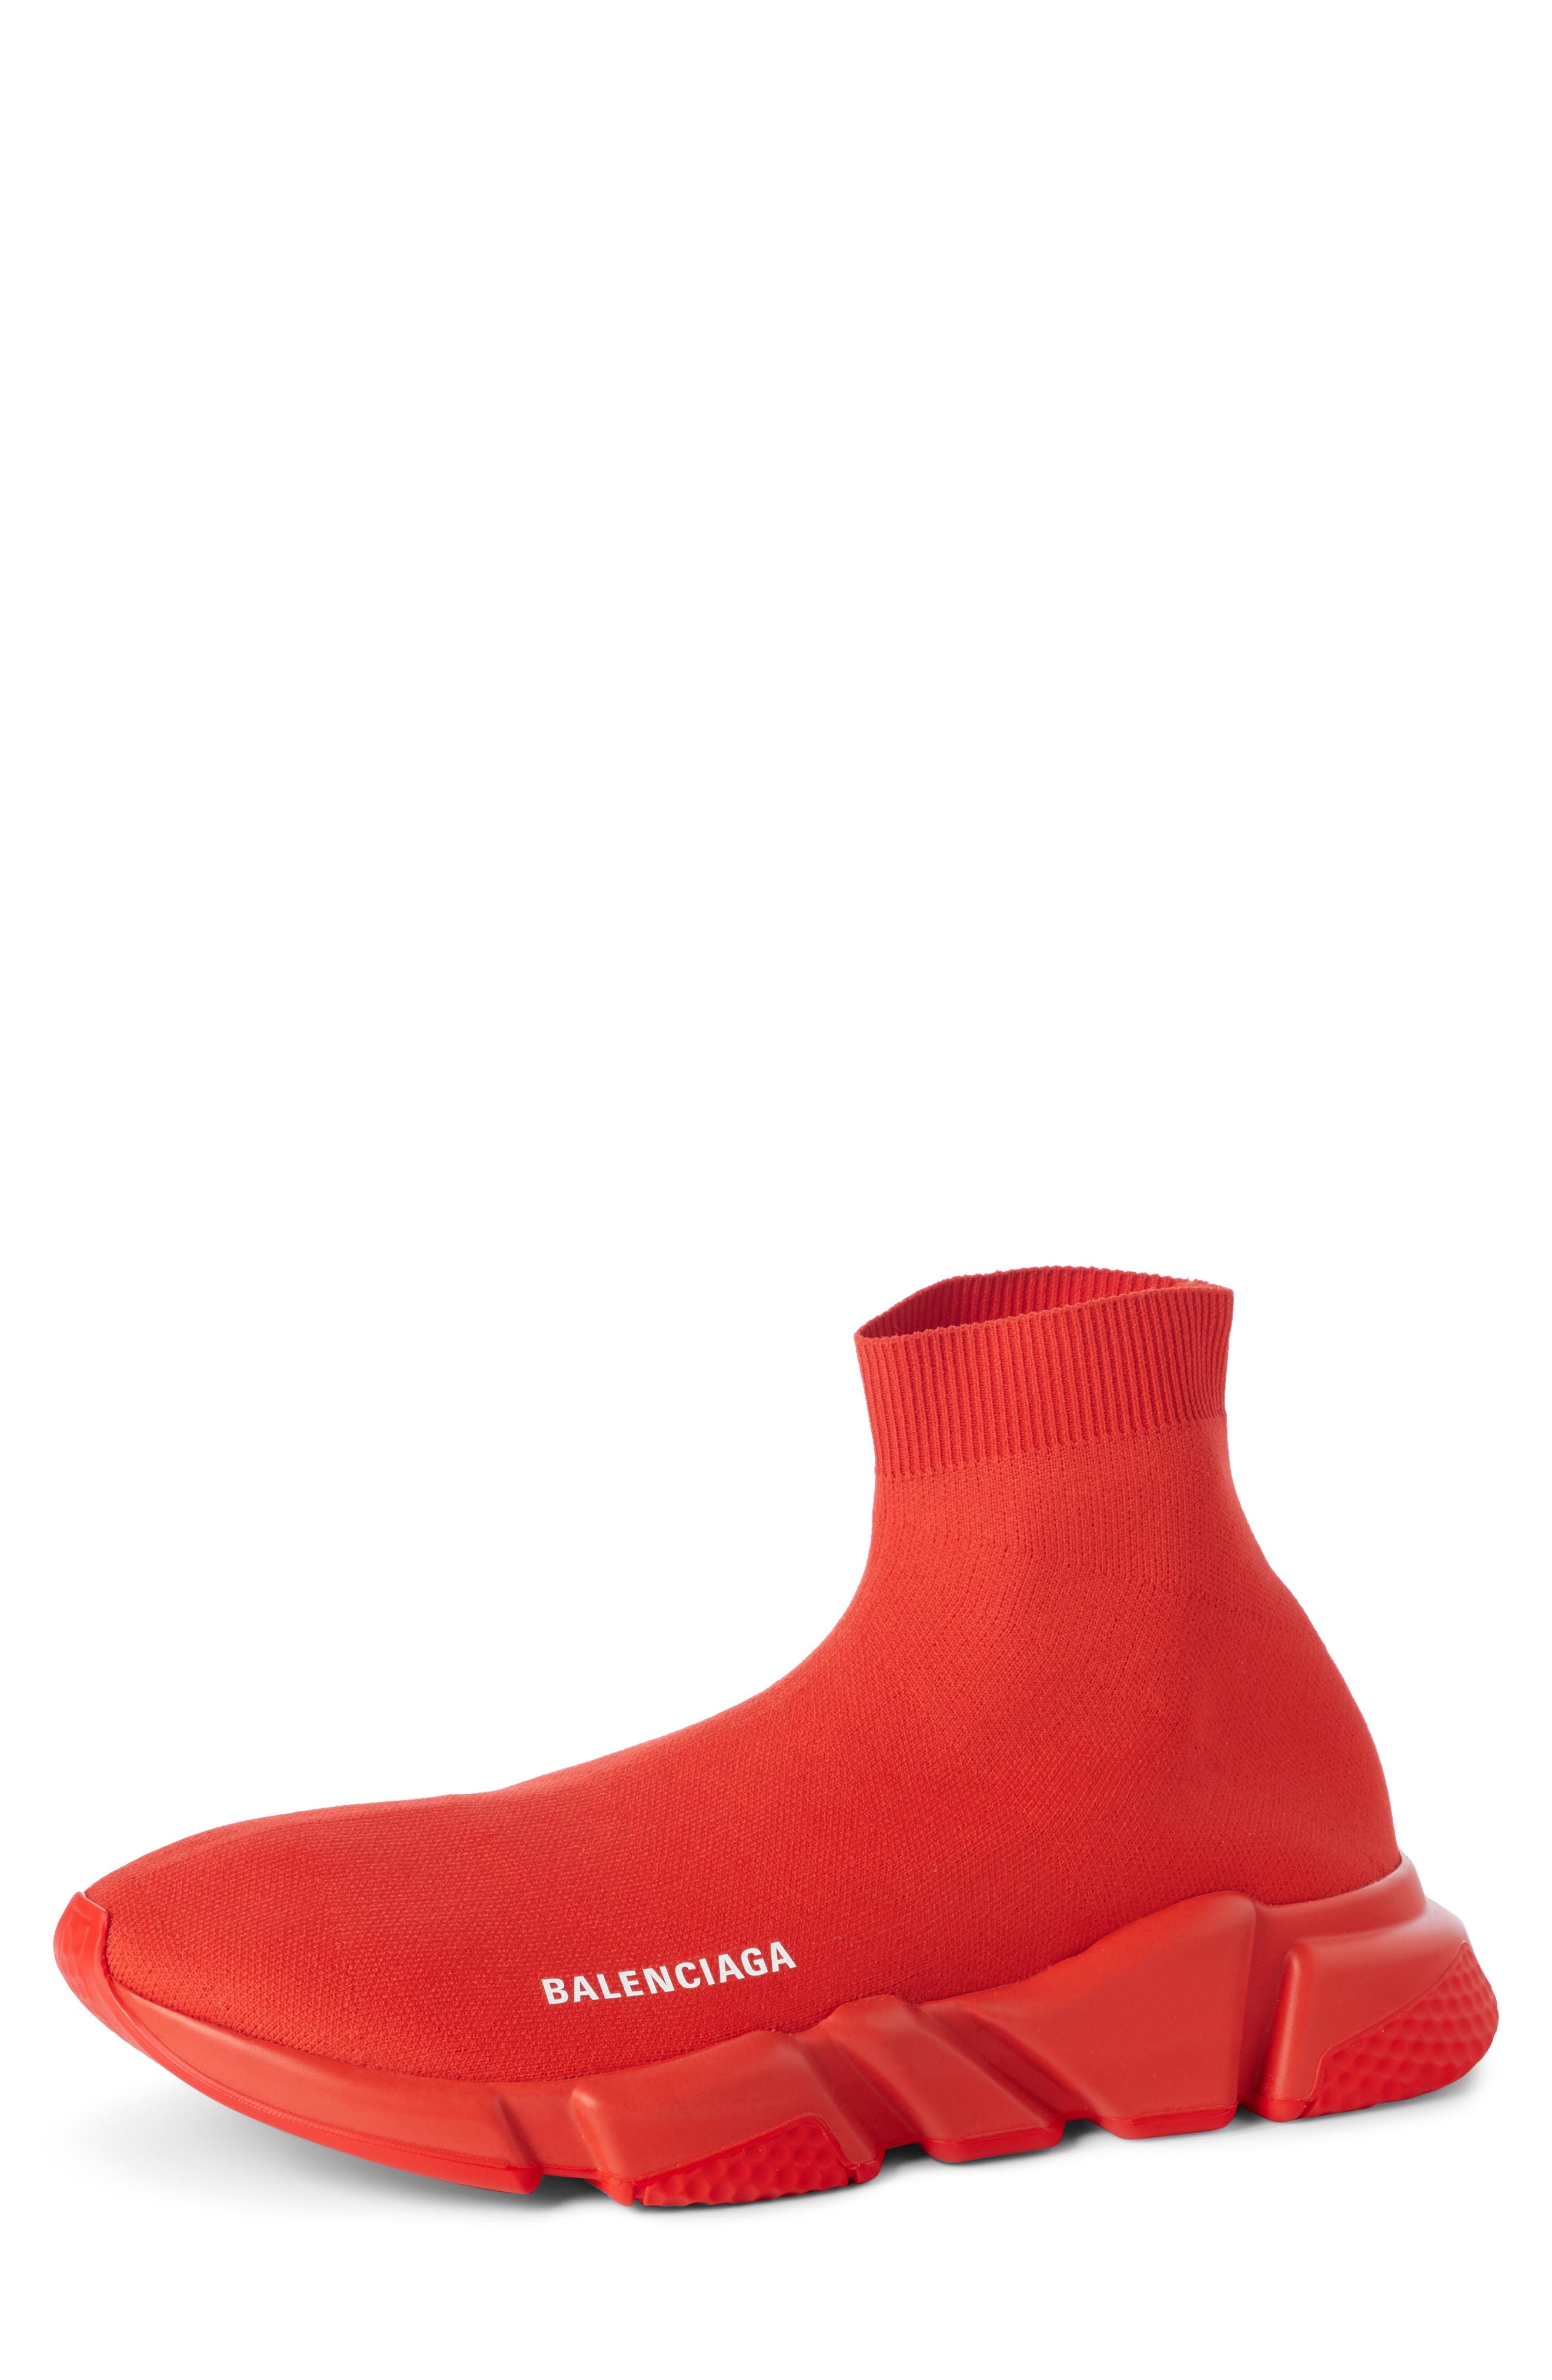 balenciaga sock shoes orange